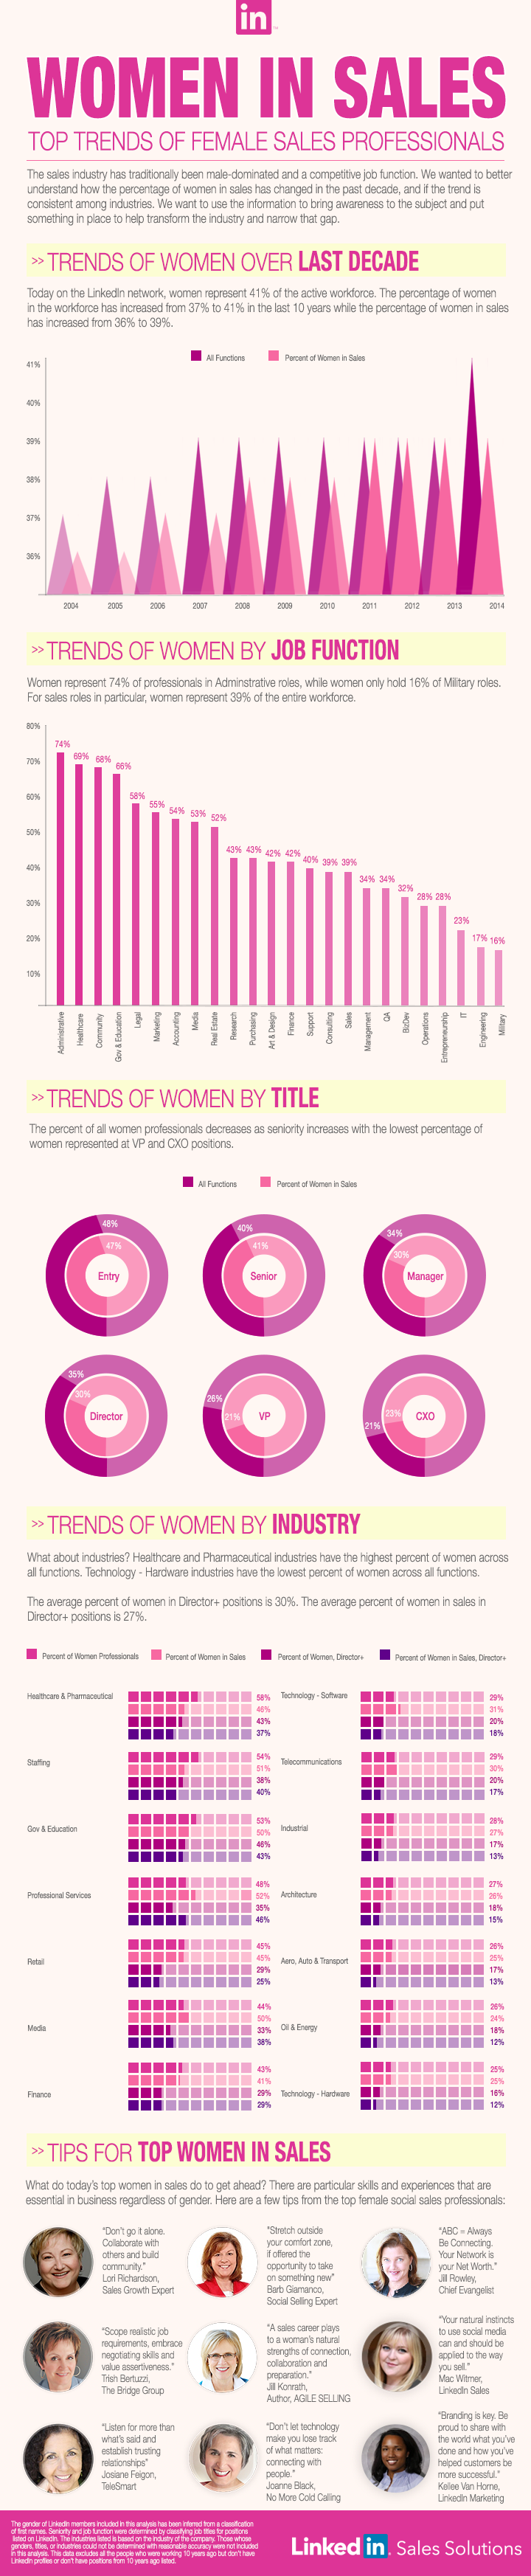 trends-of-women-in-sales-infographic